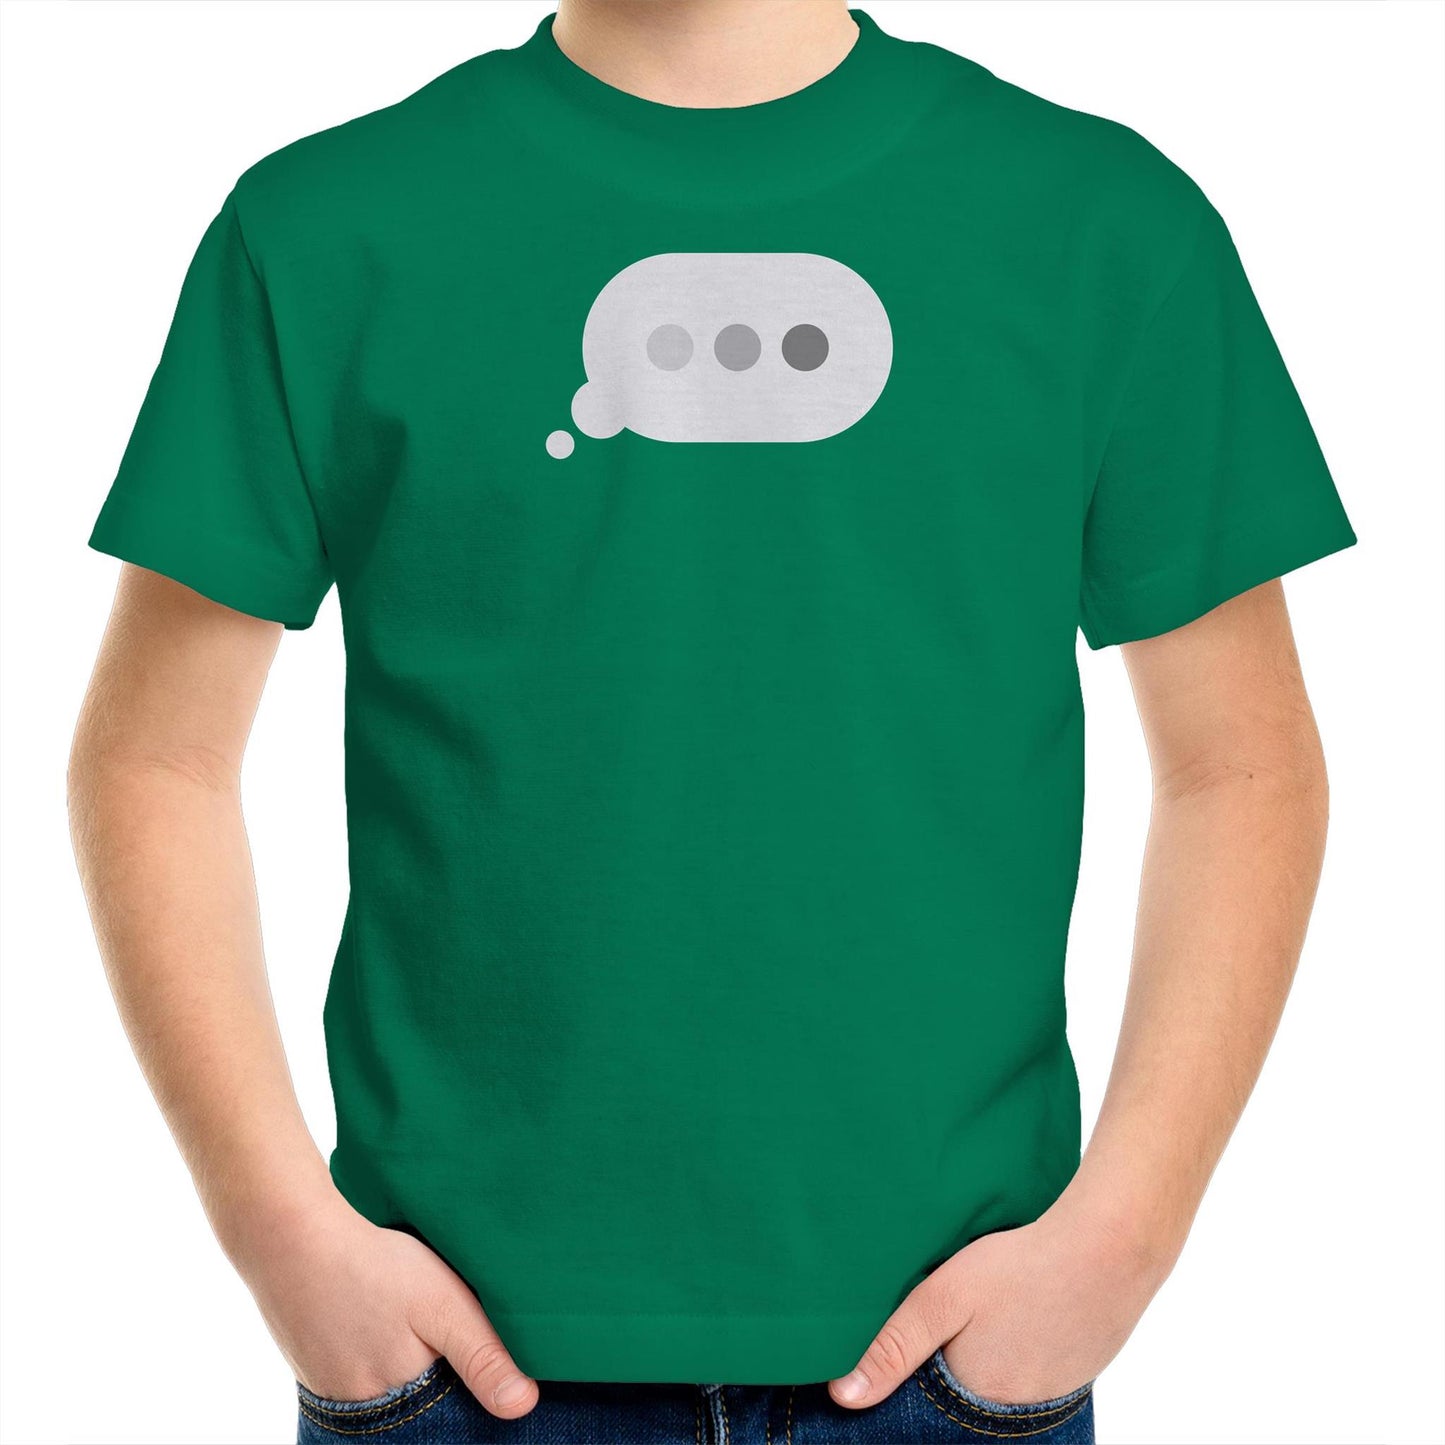 Typing Indicator T Shirts for Kids